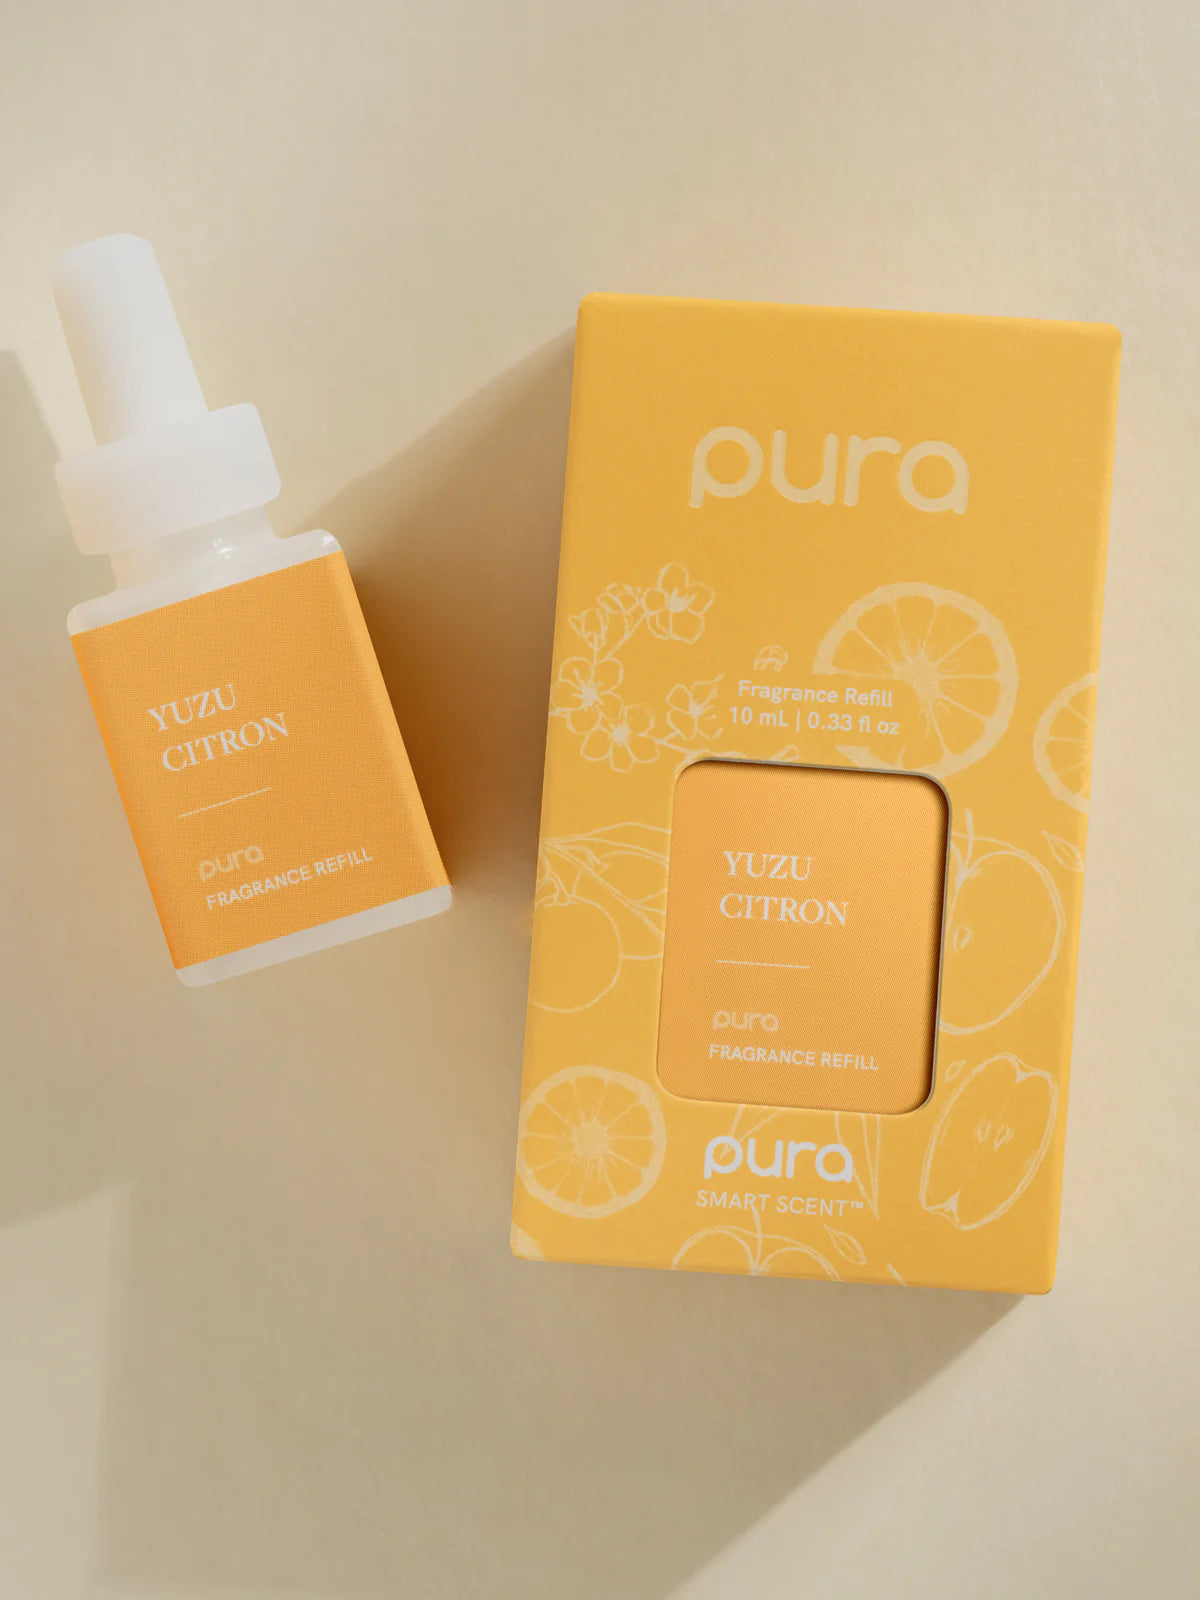 Yuzu Citron Pura Fragrance Refill